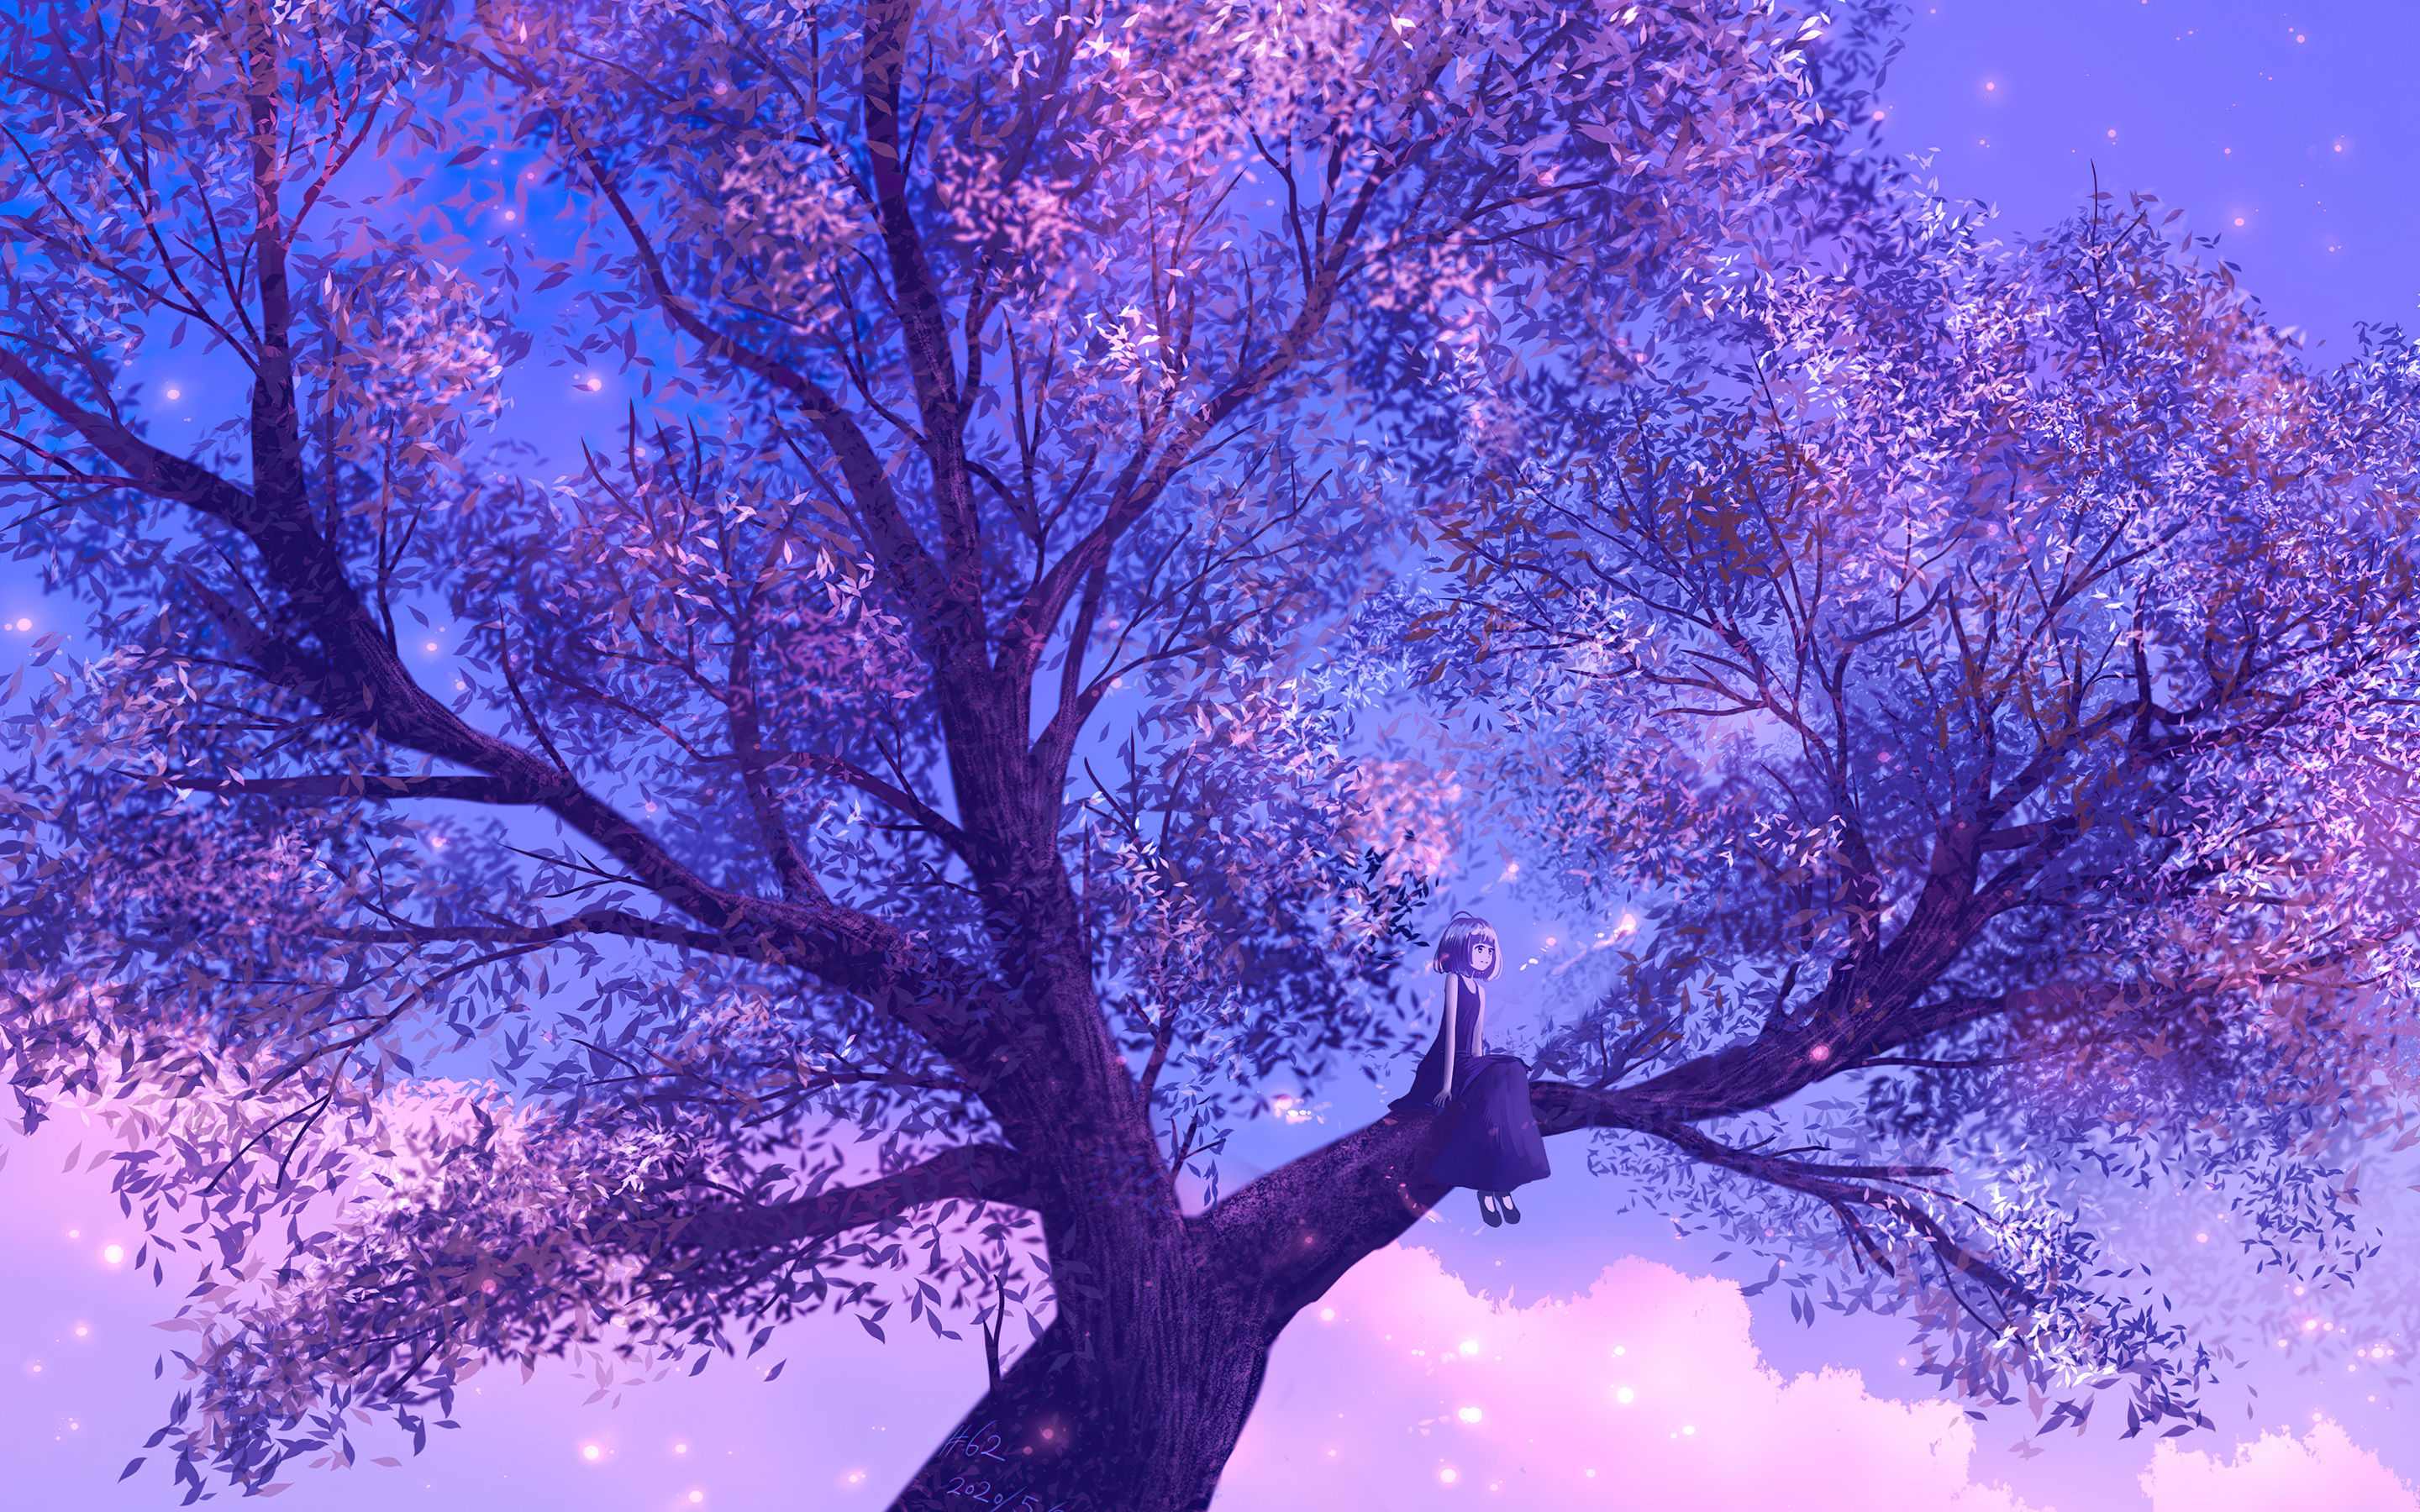 Anime Girl Sitting On Purple Big Tree 4k Macbook Pro Retina HD 4k Wallpaper, Image, Background, Photo and Picture